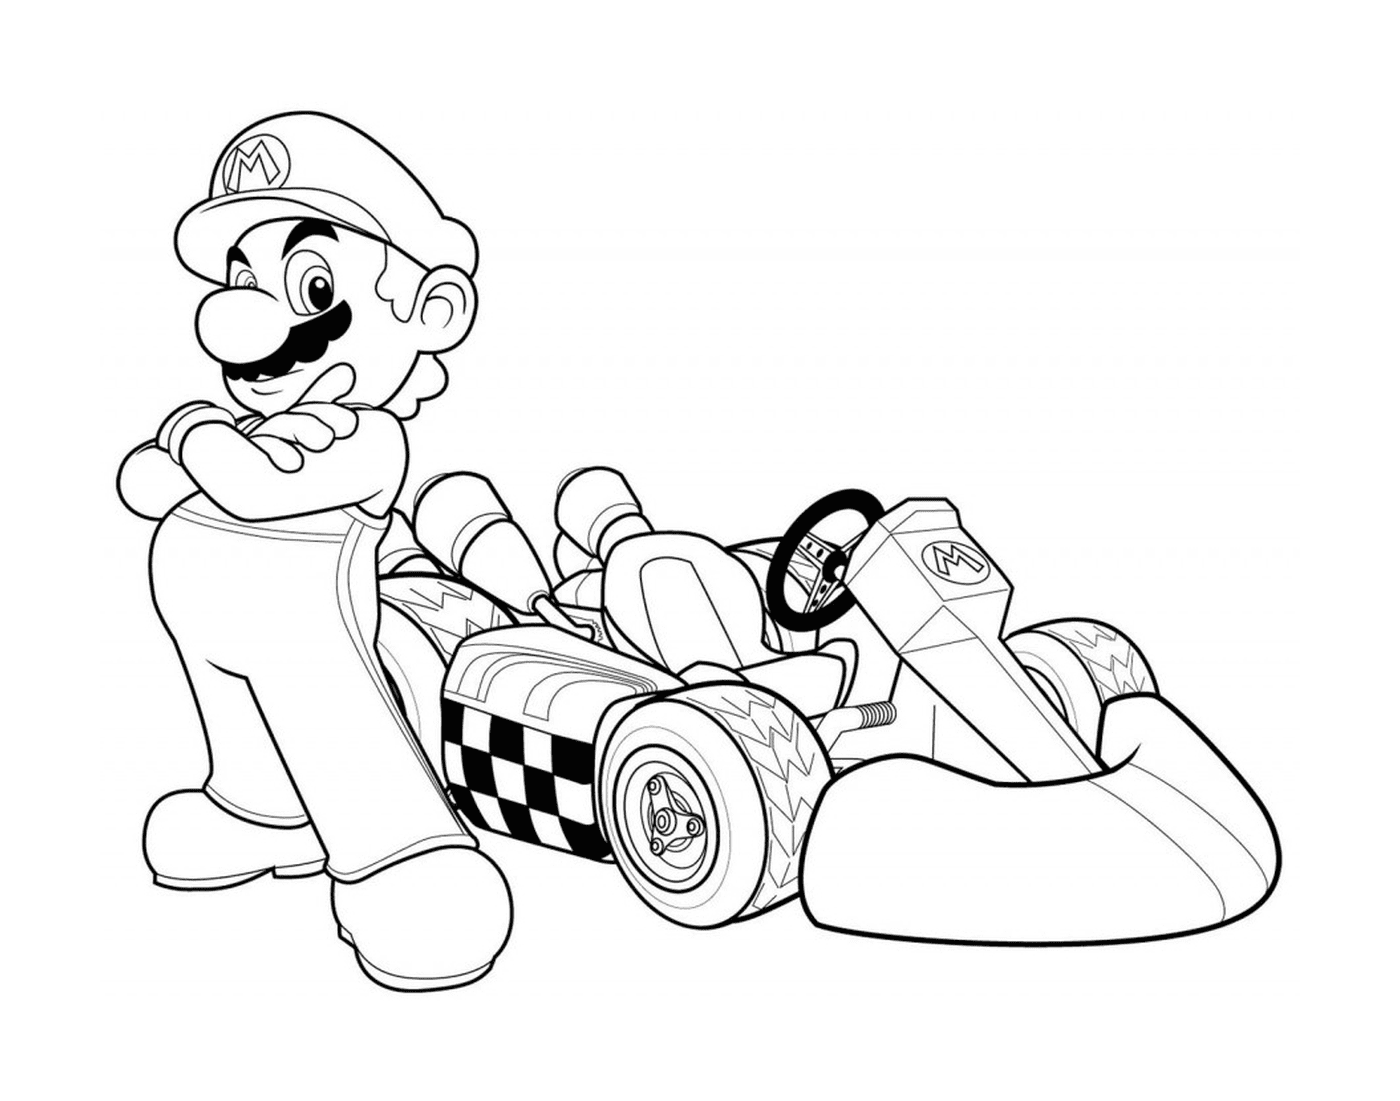  Mario Kart, ein Formel-1-Auto 